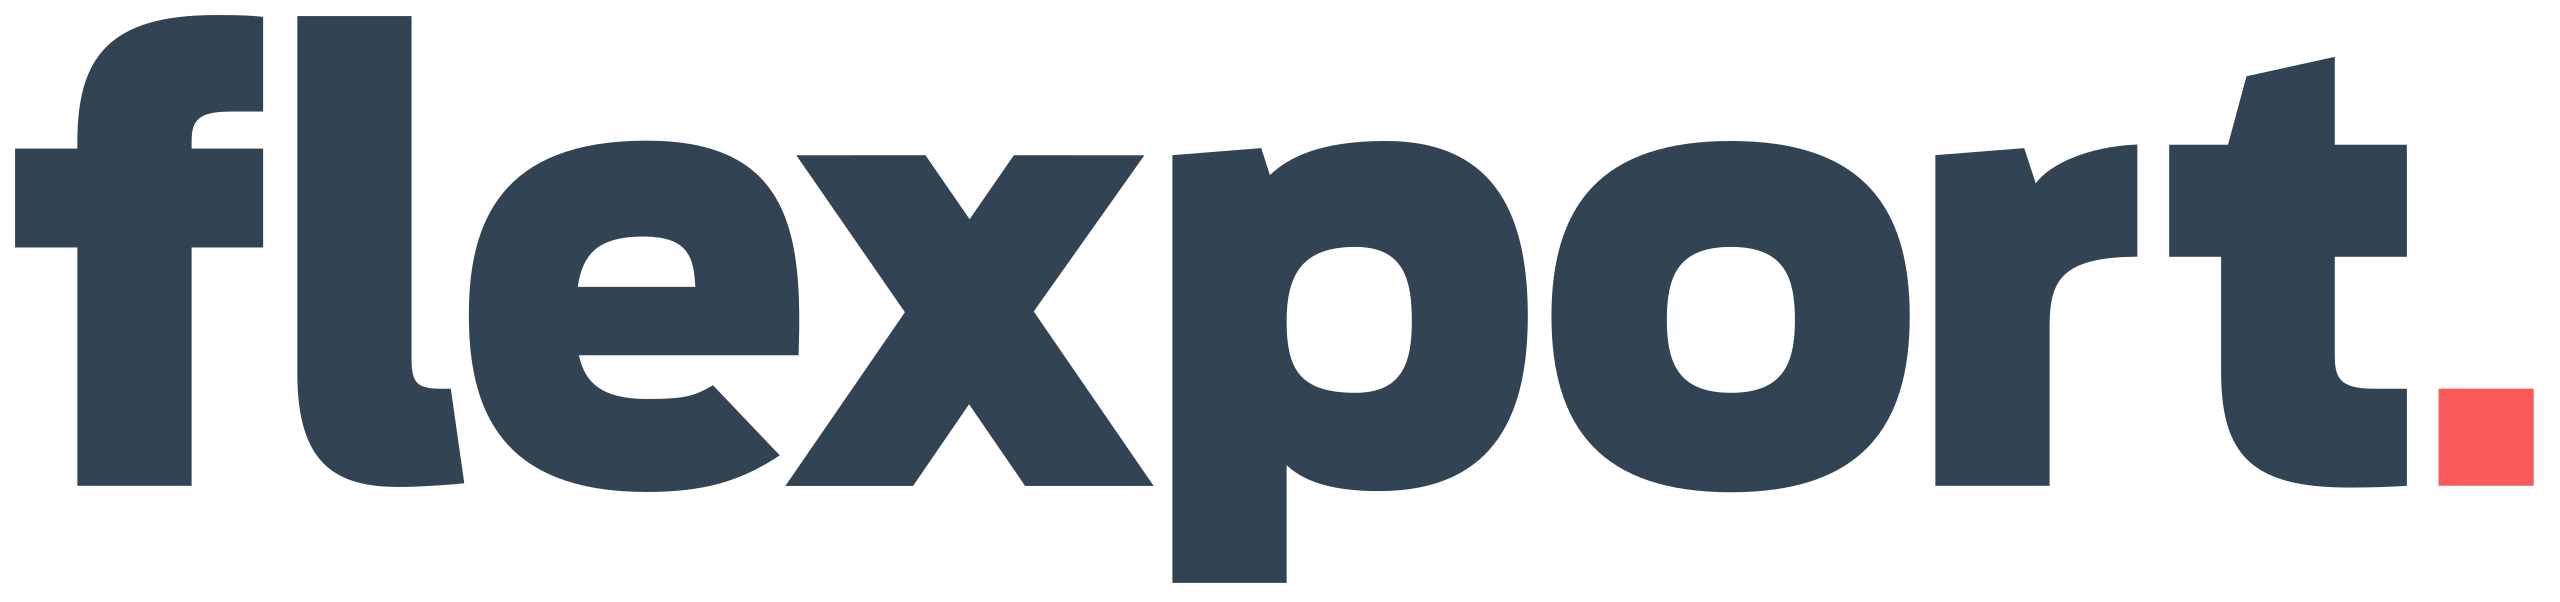 Flexport Logo